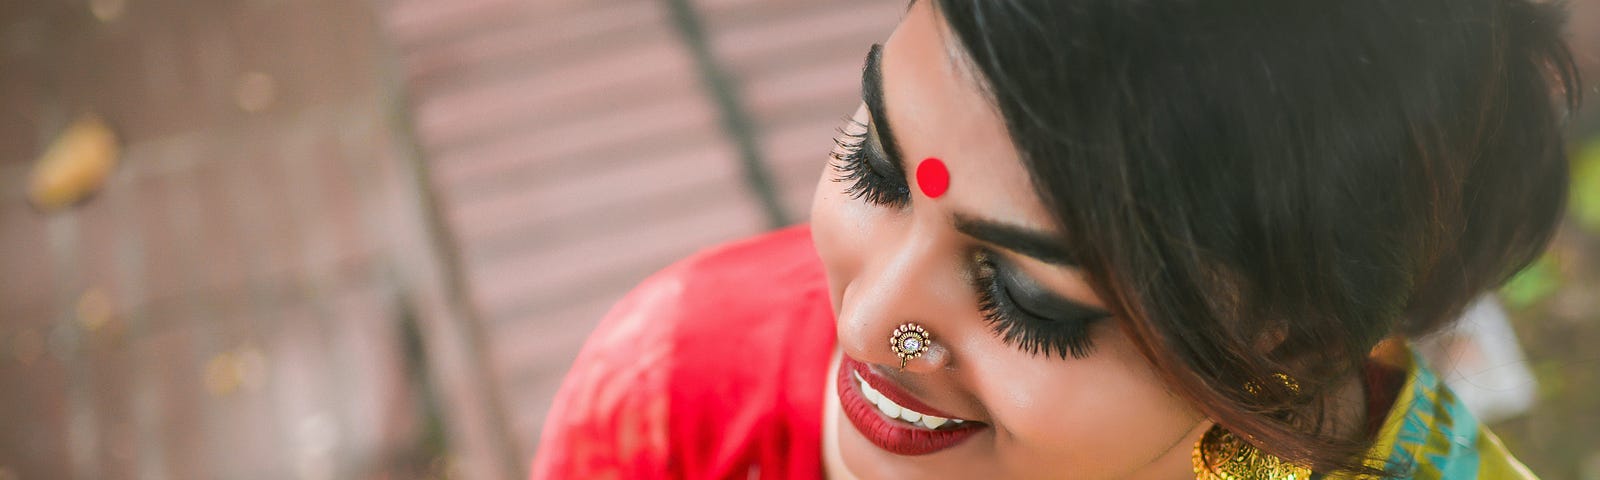 woman in yellow sari smiling